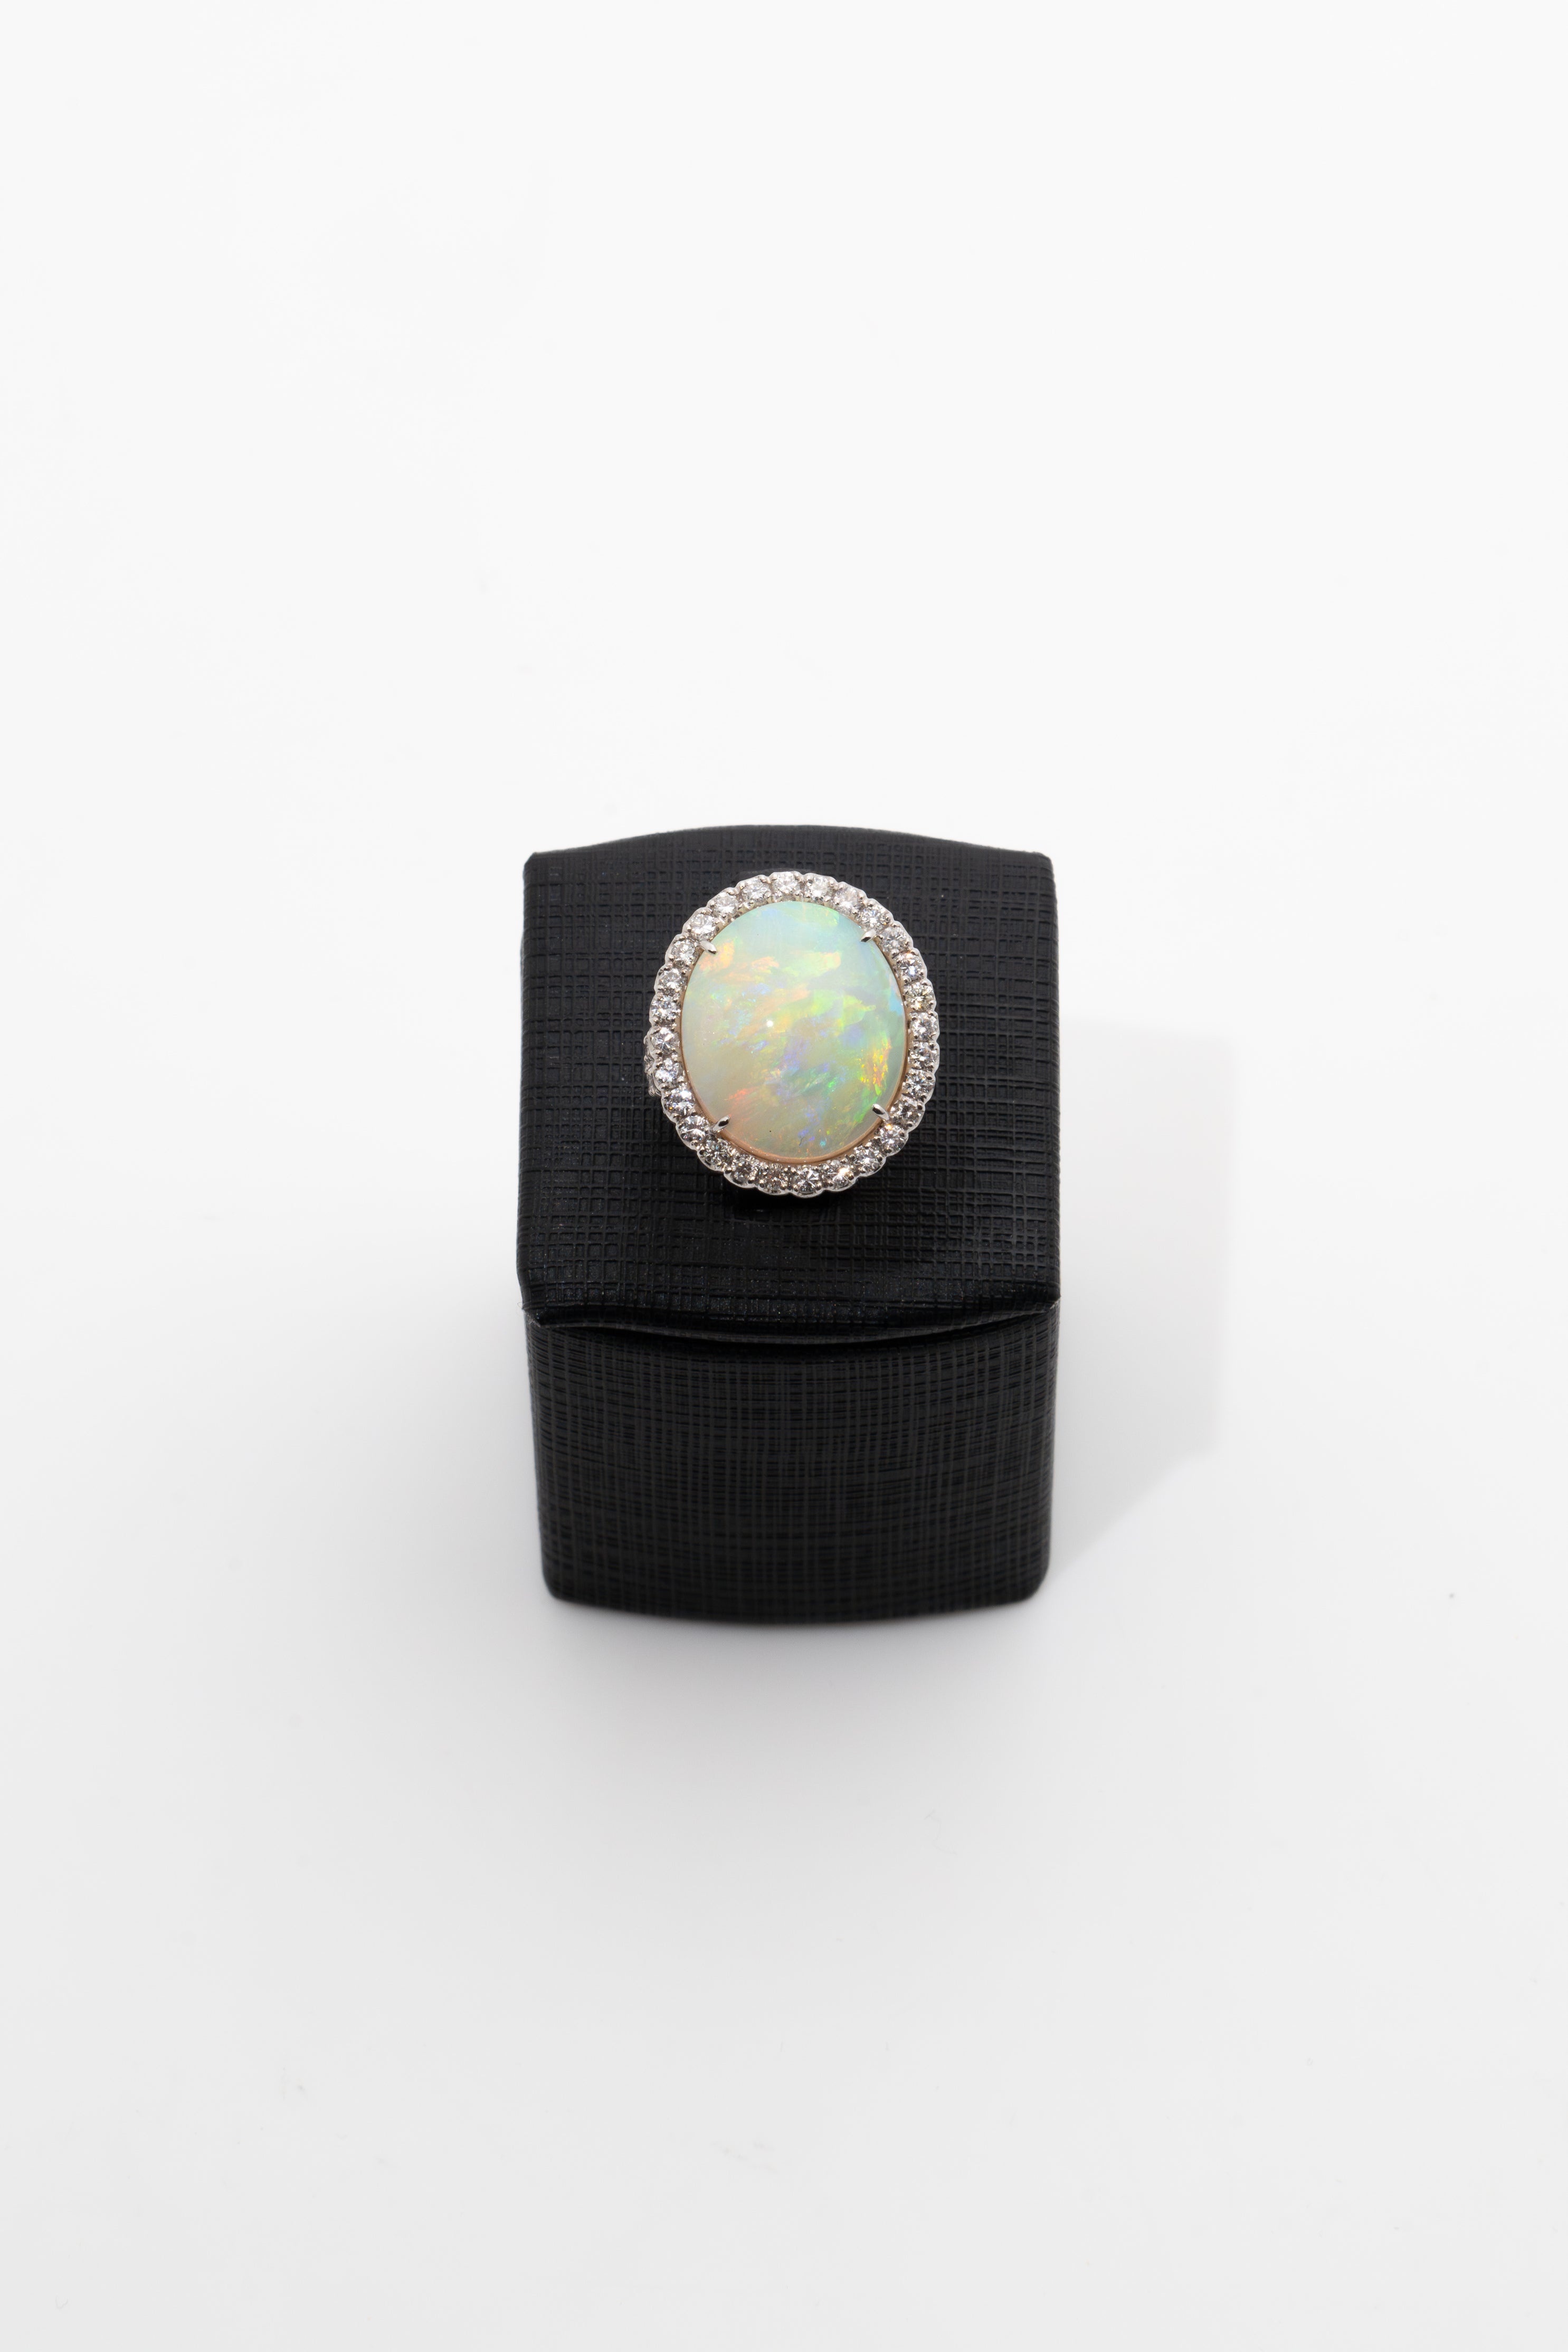 Custom by MV&Co Opal & Diamond Ring